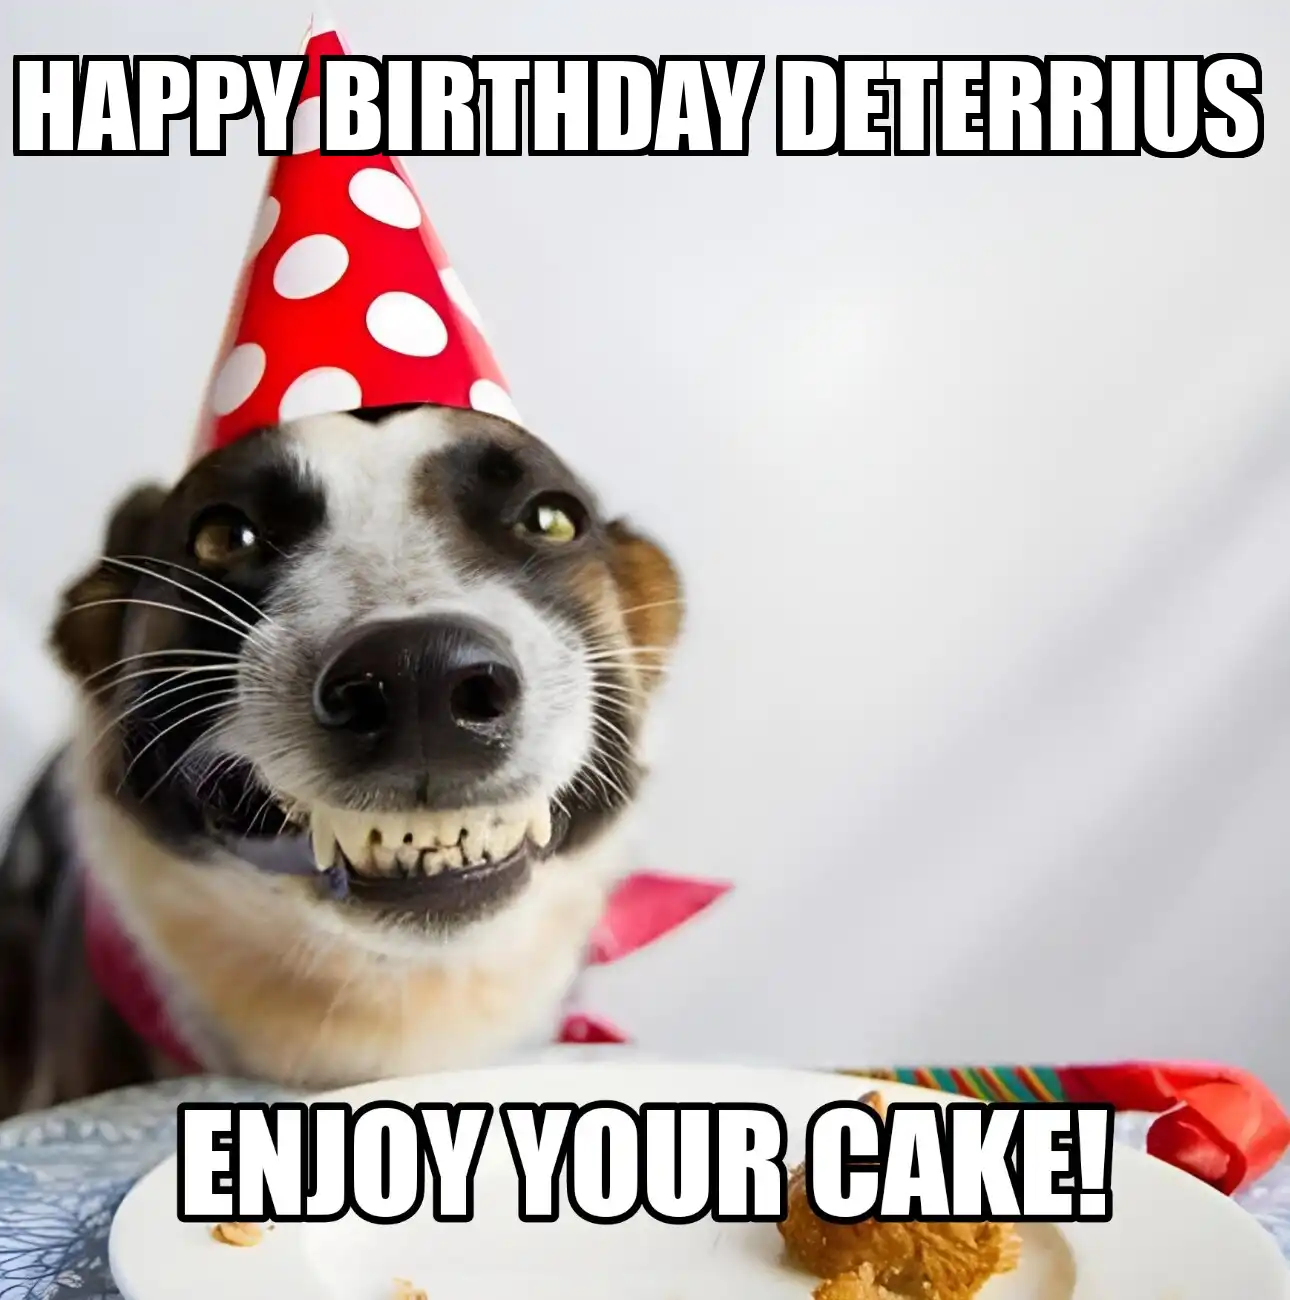 Happy Birthday Deterrius Enjoy Your Cake Dog Meme